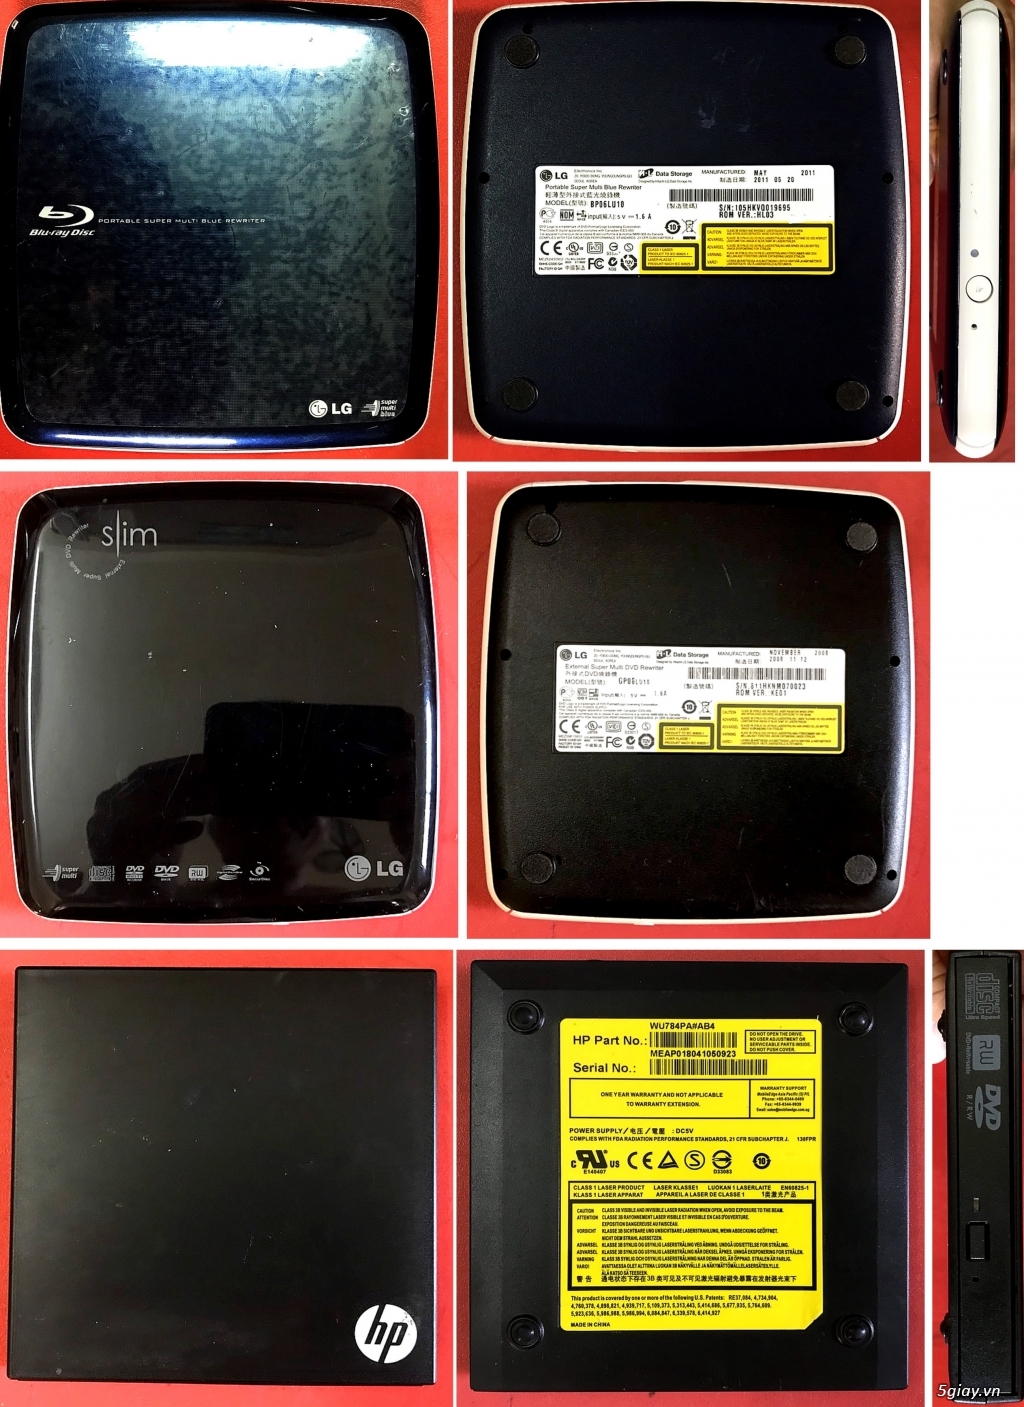 LCD, HDD Sata & Ata, Ram, Adaptor, Linh kiện, Laptop, Card Wifi...update thường - 7